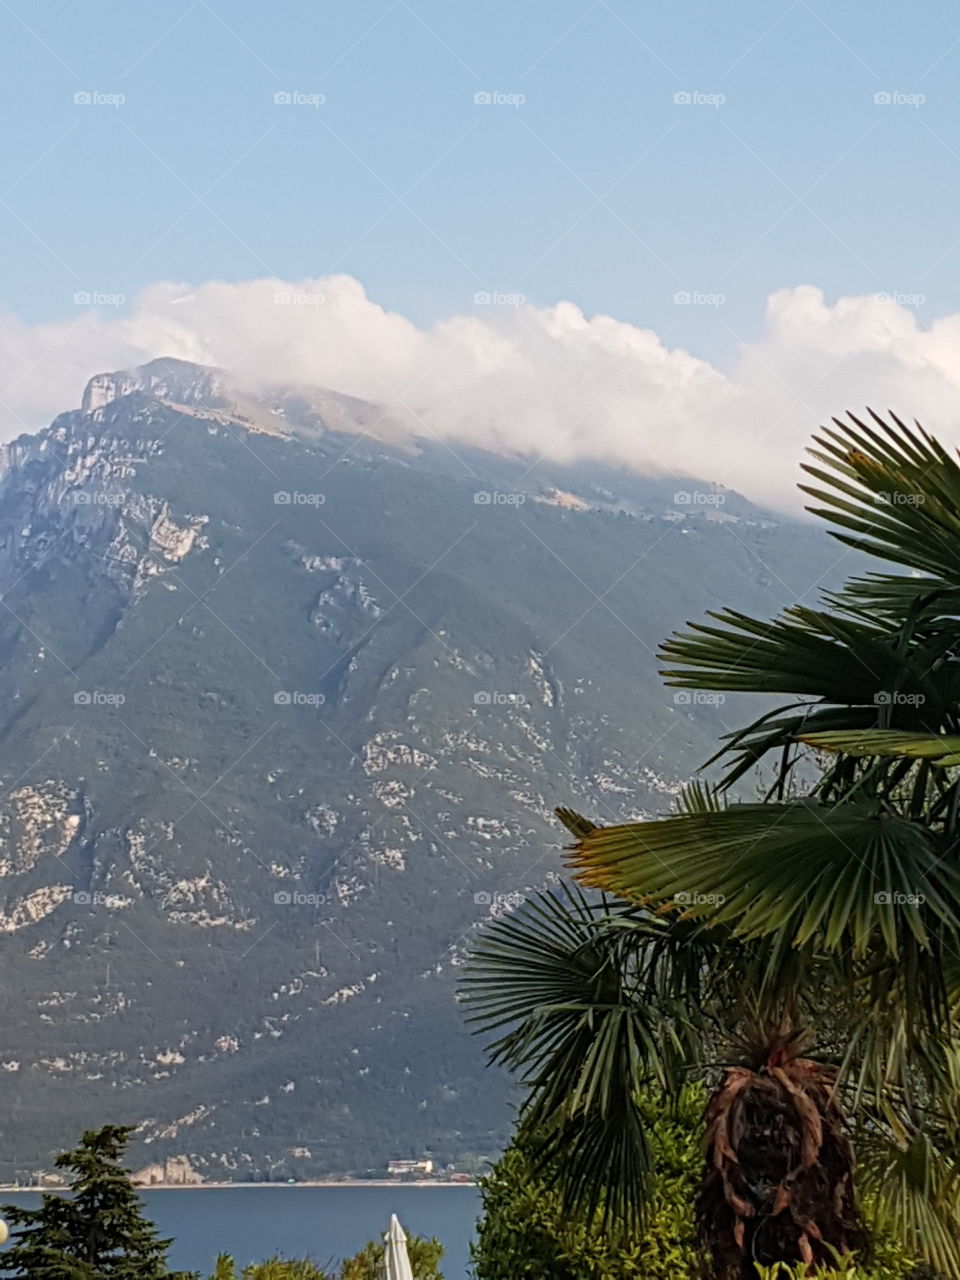 Cloud shrouded Monte Baldo